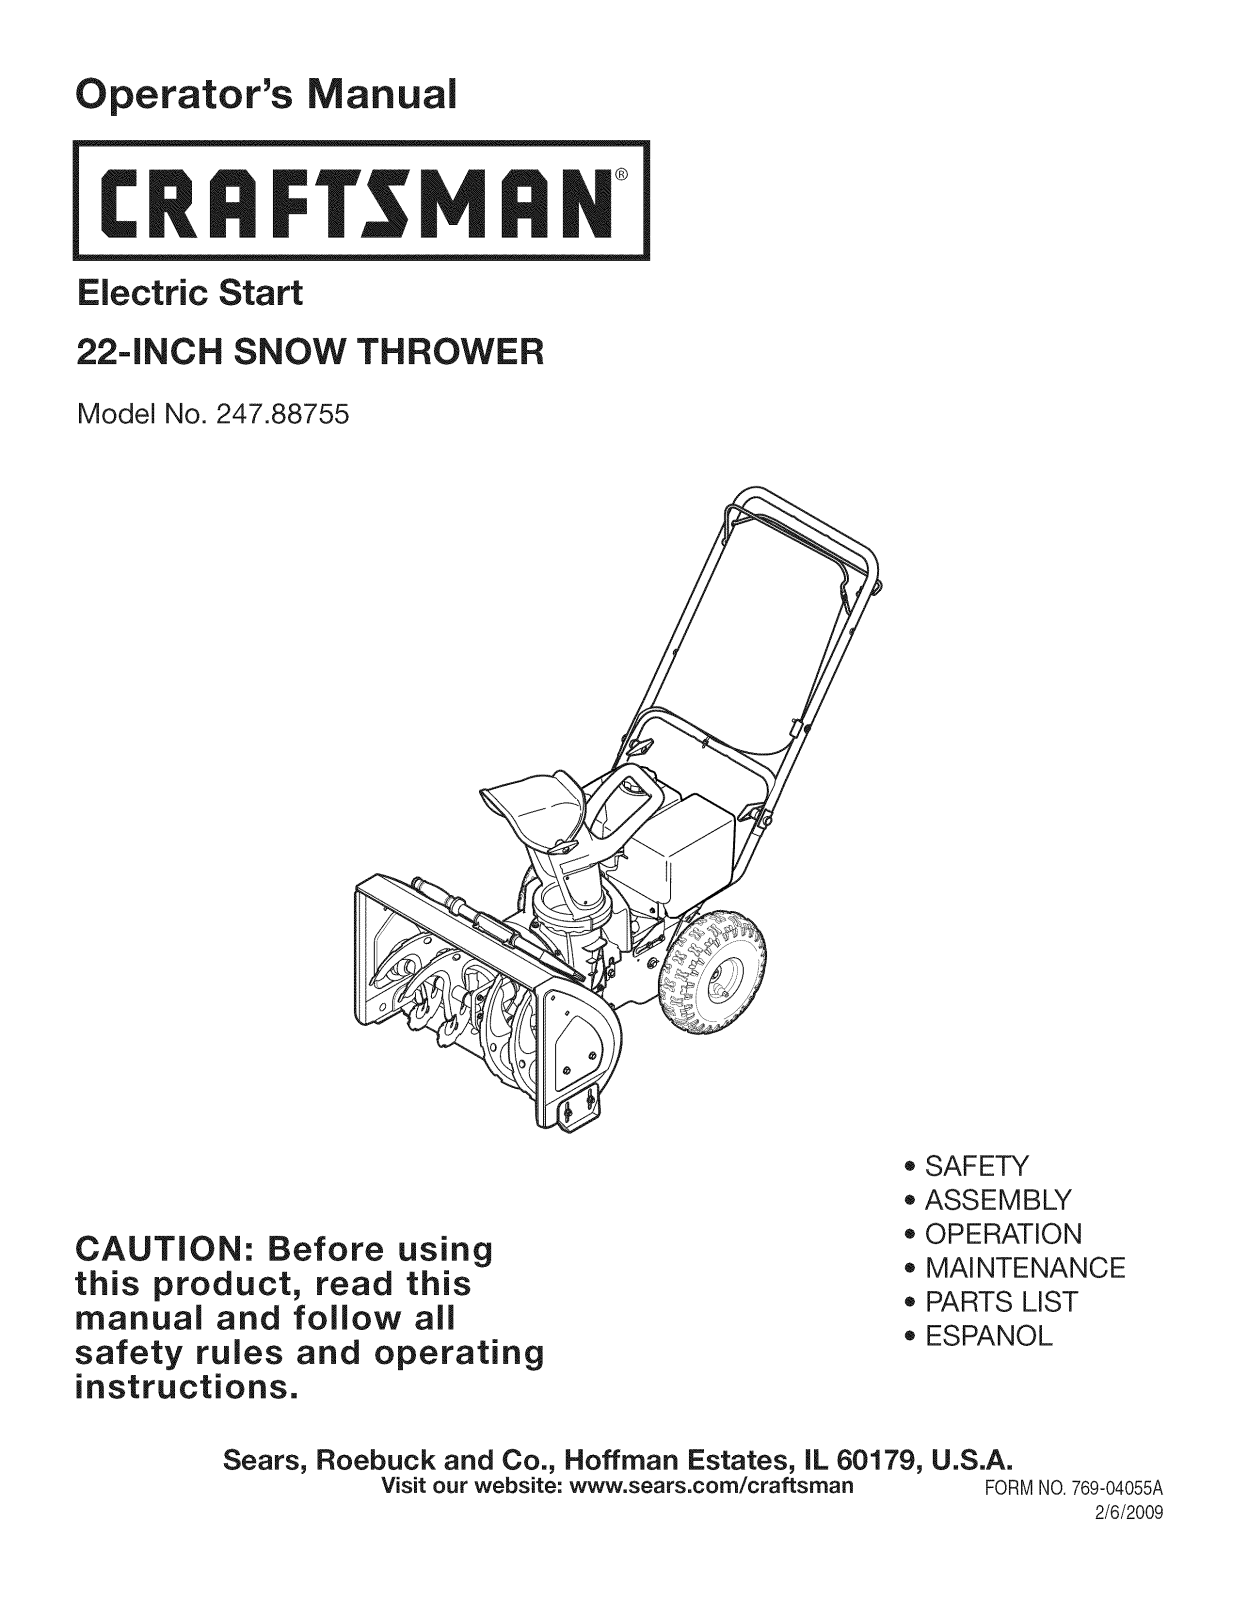 Craftsman 247887550 Owner’s Manual